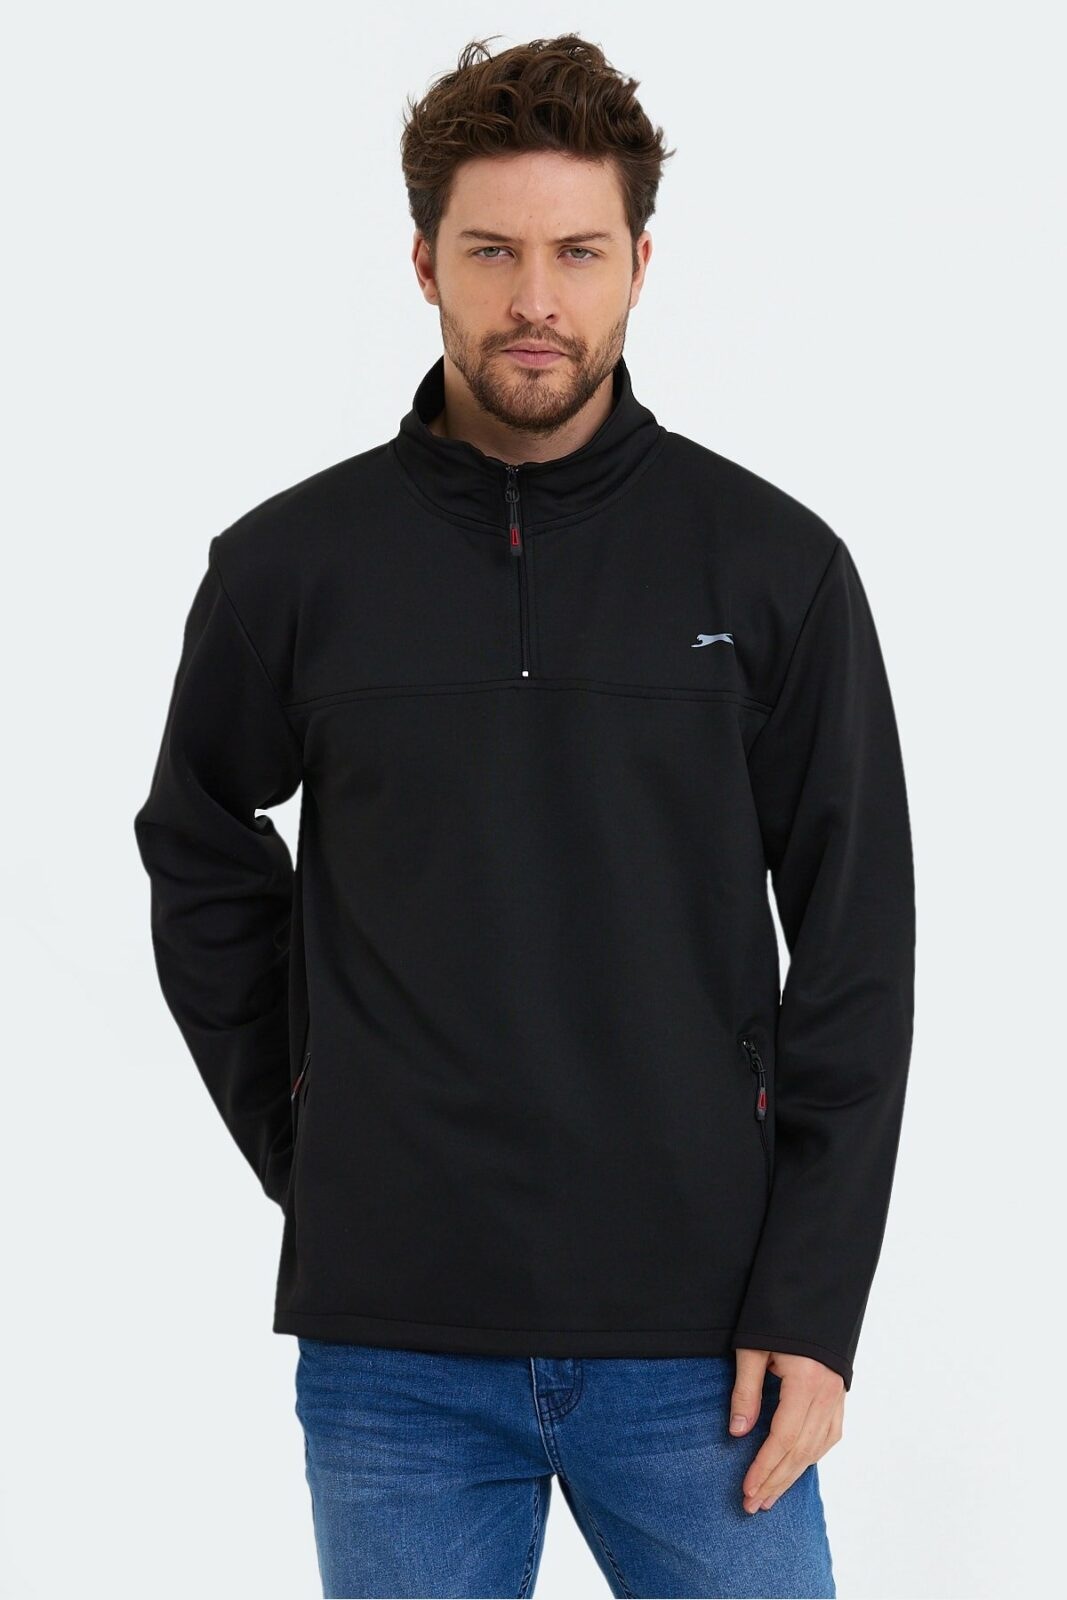 Slazenger Sports Sweatshirt - Black